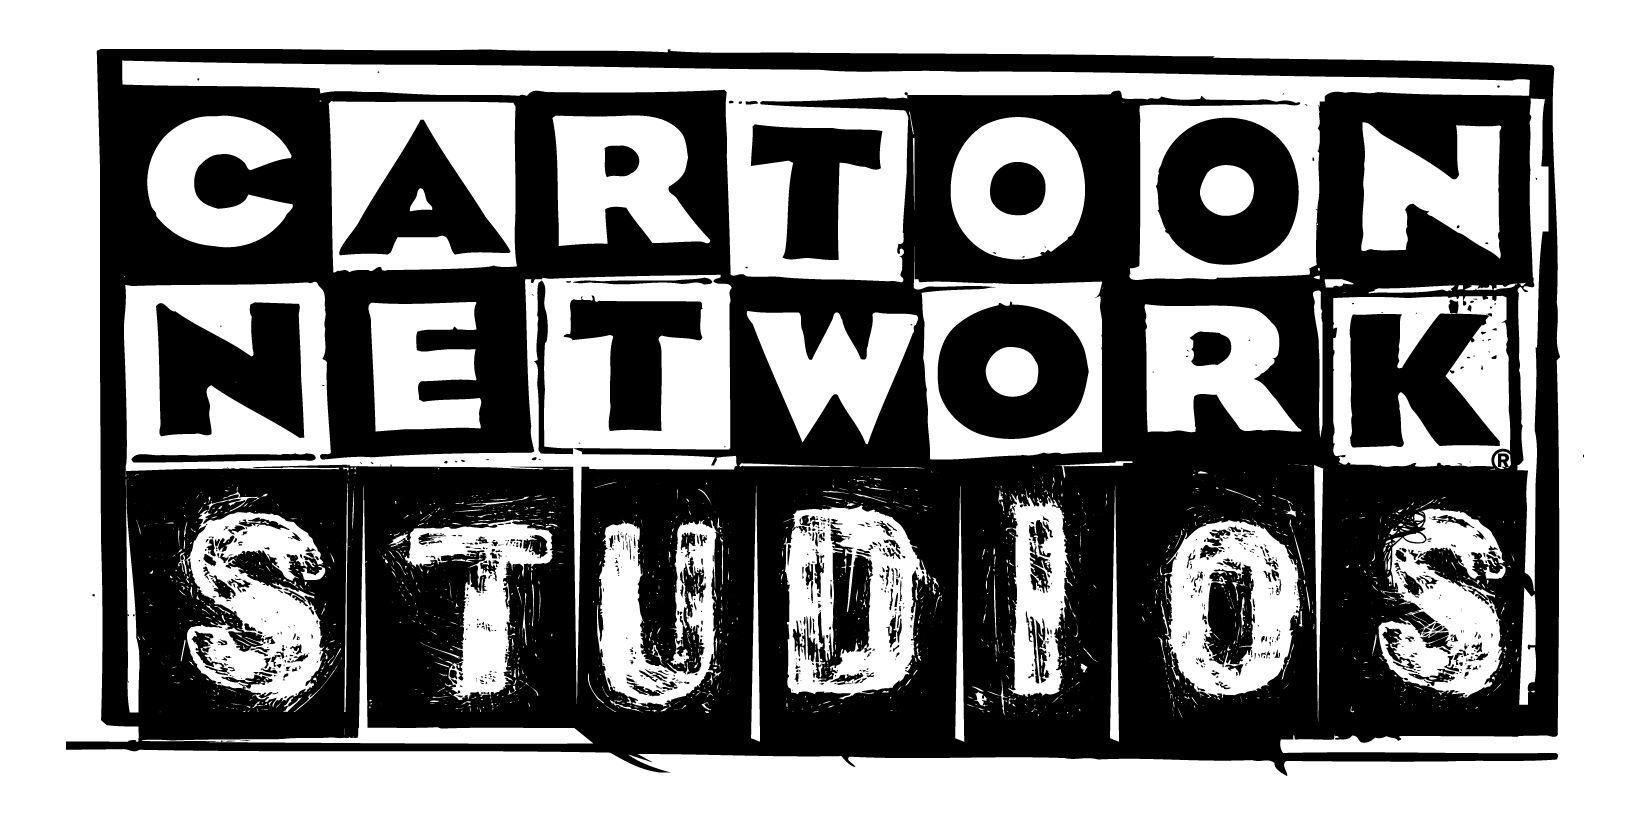 Cartoonnetwork.com Logo - Cartoon Network Studios | The Cartoon Network Wiki | FANDOM powered ...